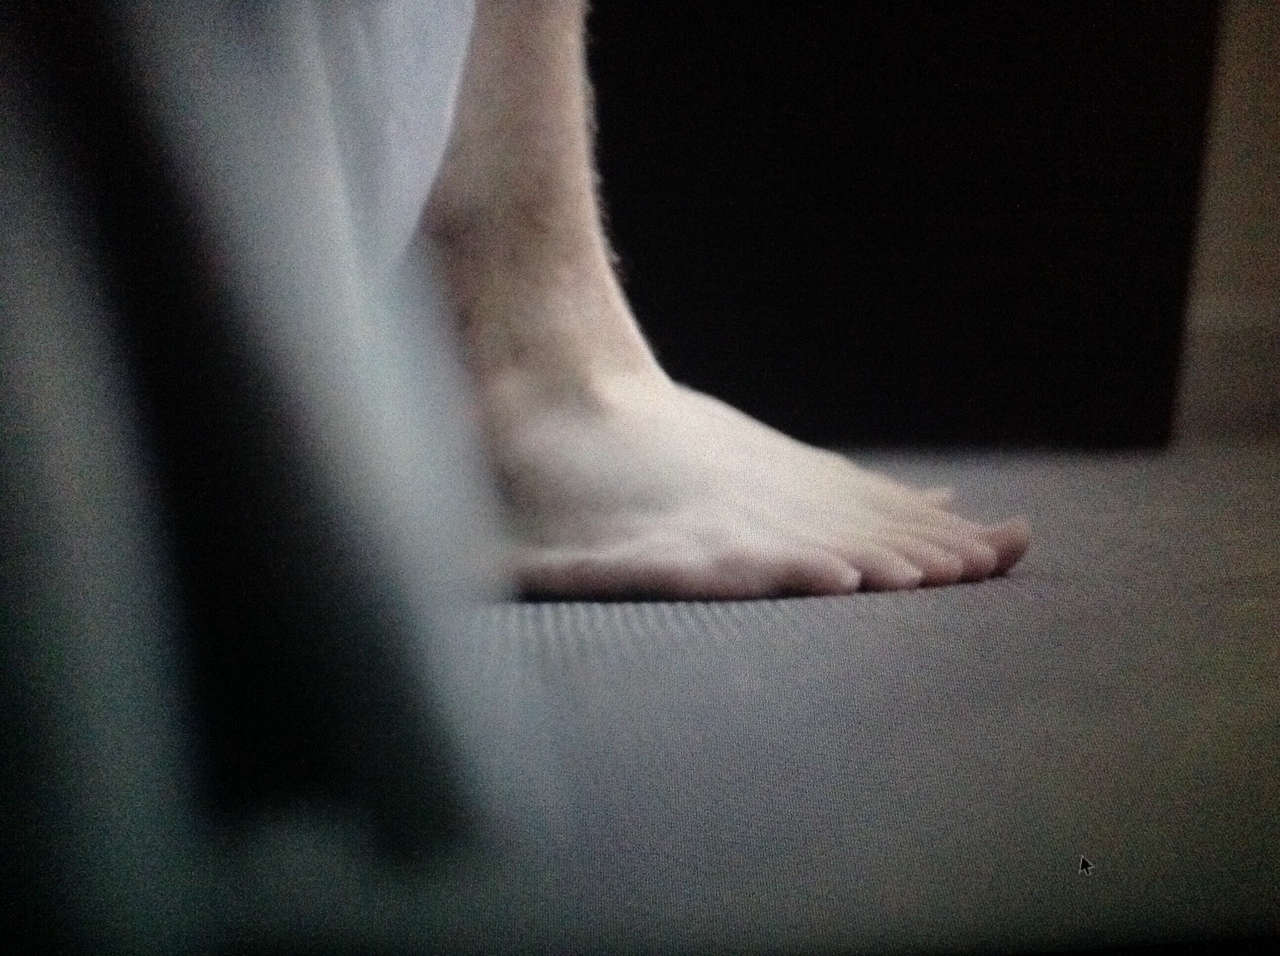 Connor Ball Feet